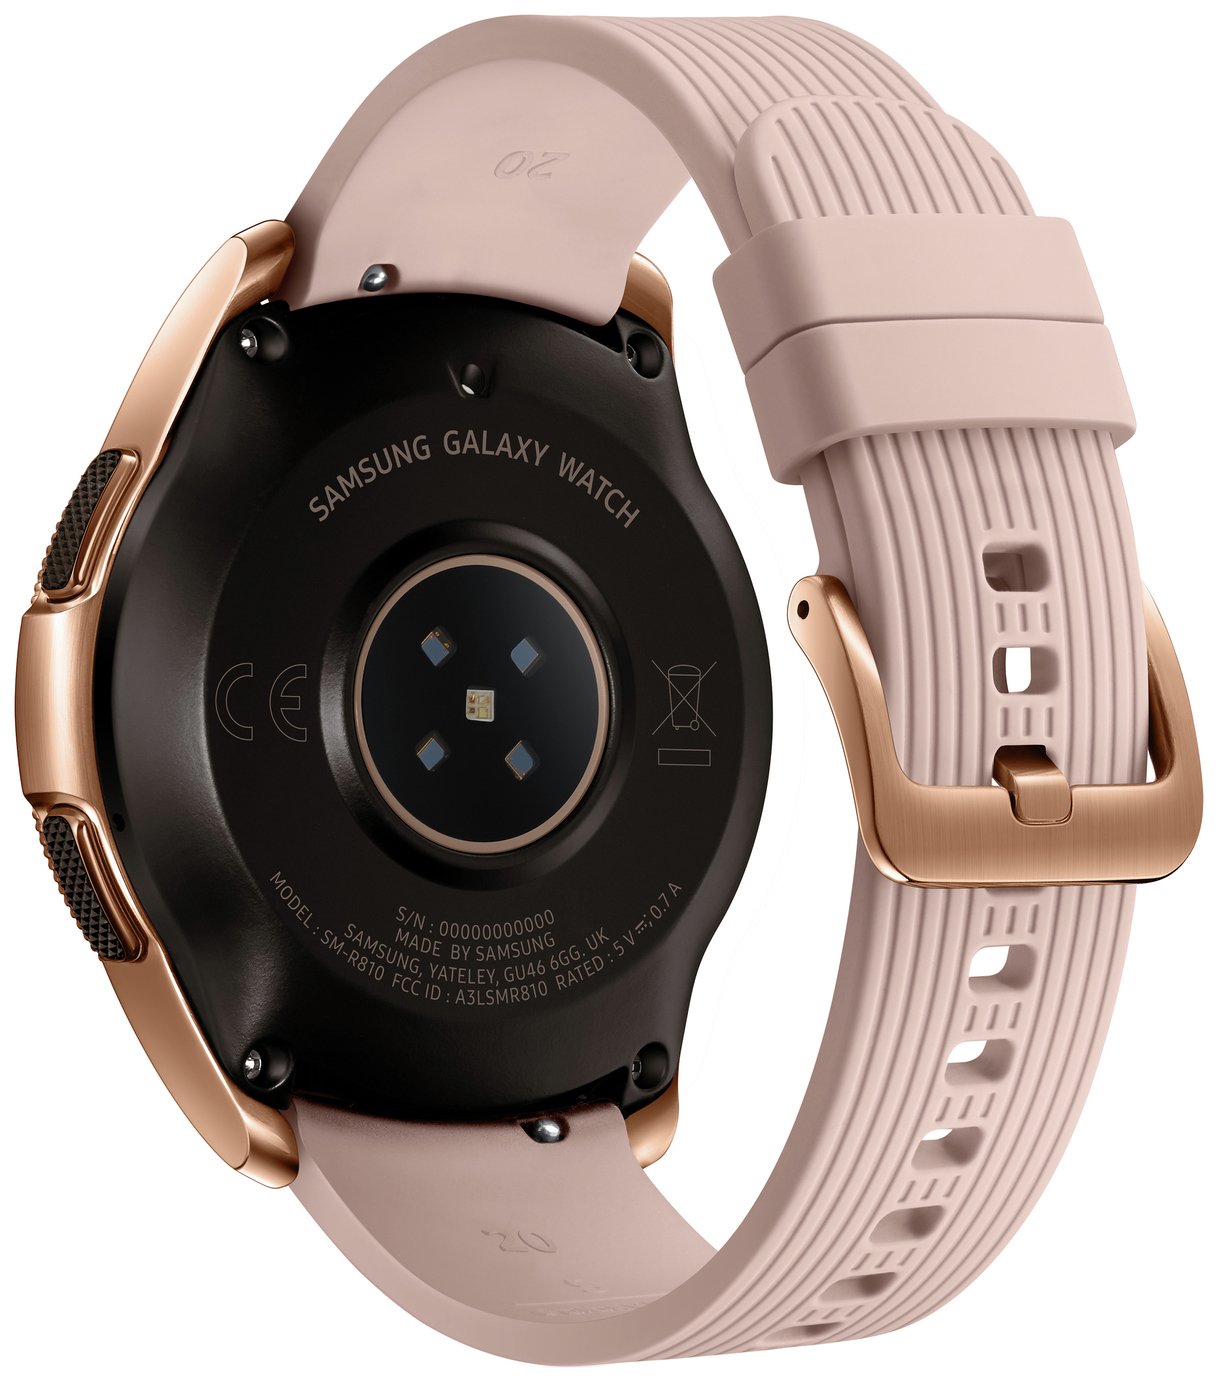 Samsung Galaxy 42mm Smart Watch Review